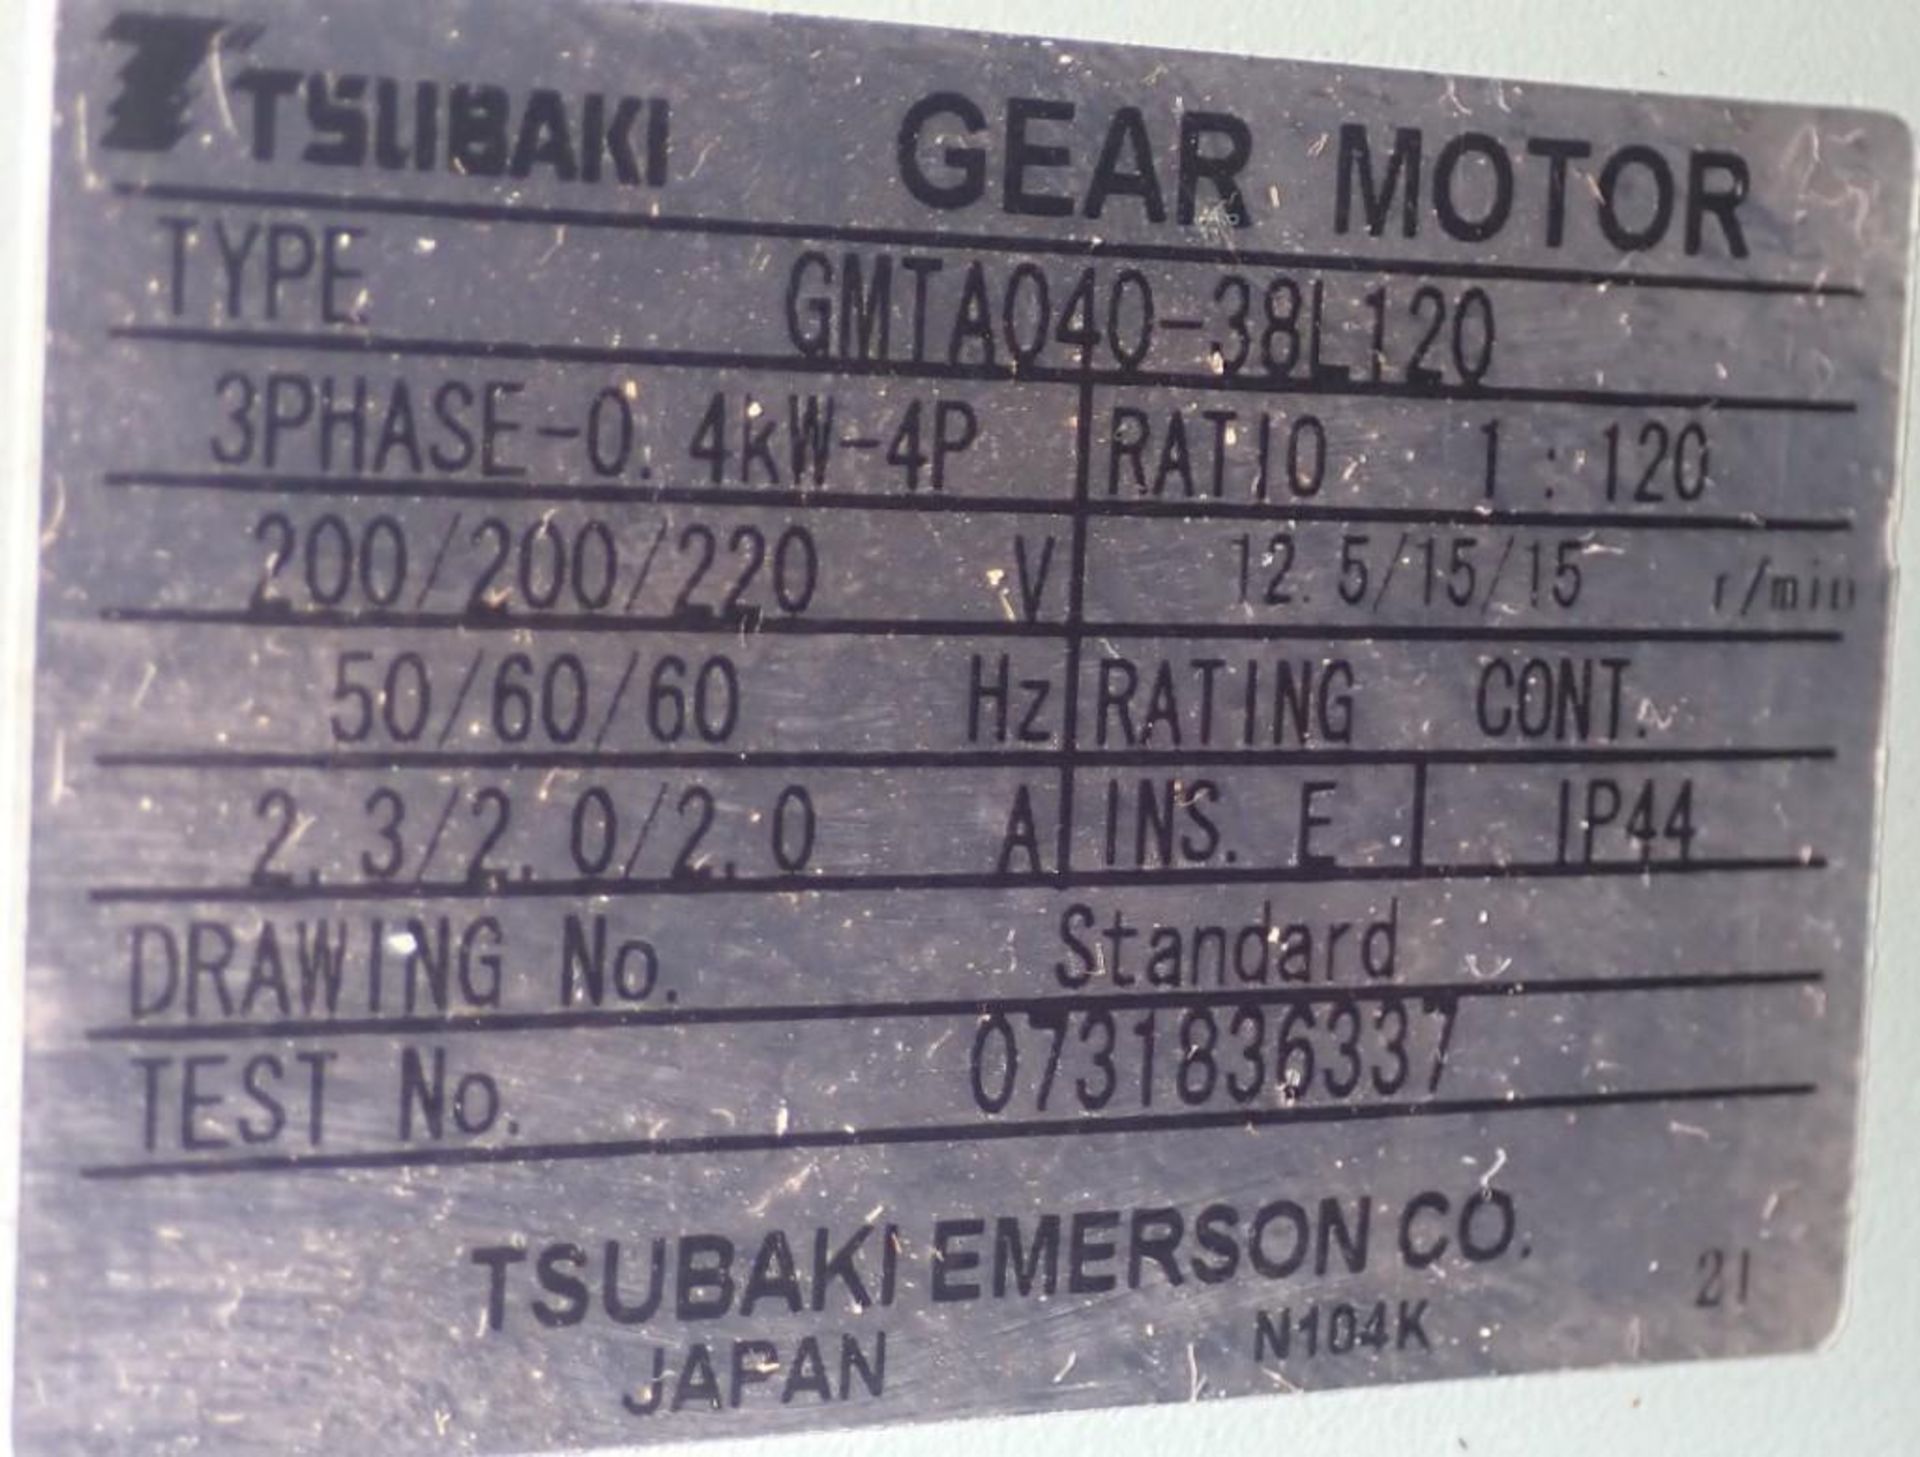 Tsubaki #GMTA040-38L120 Gear Motor - Image 3 of 3